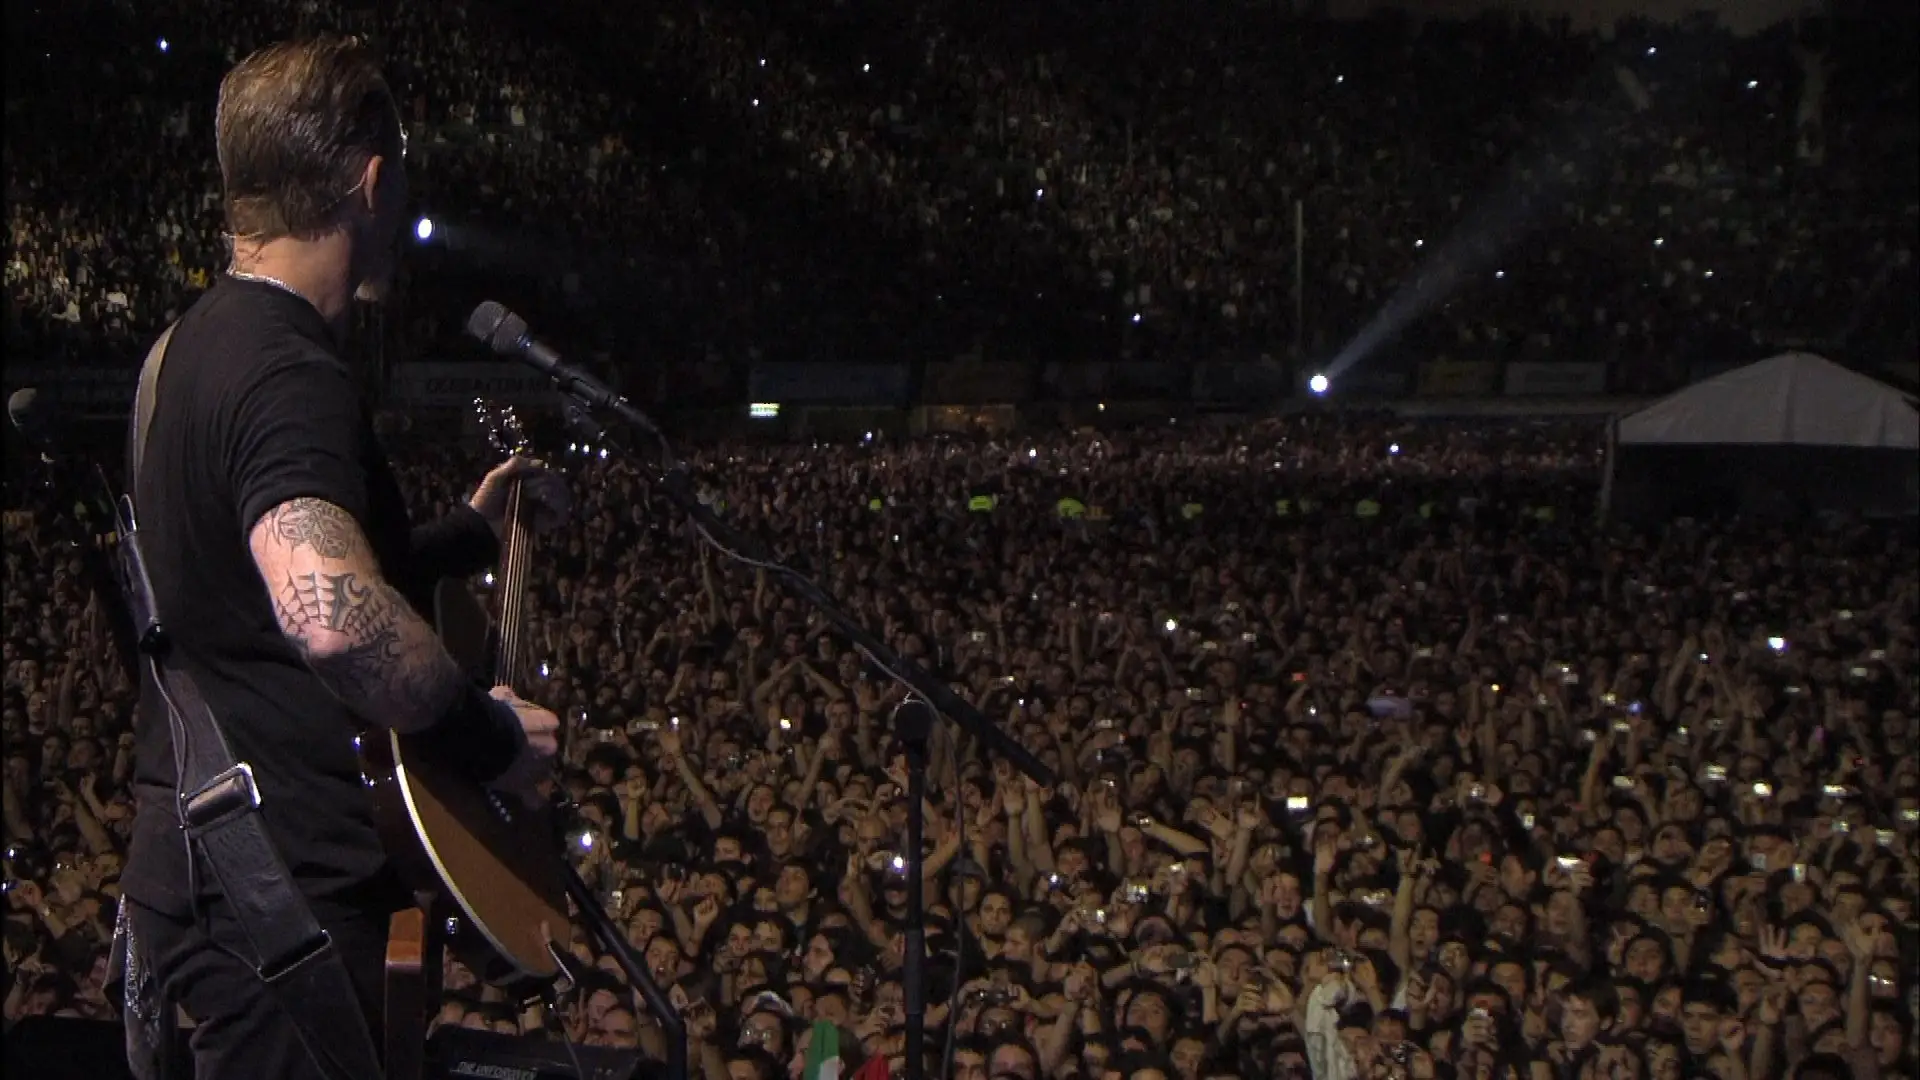 Unforgiven слушать. Metallica Live Mexico 2009. Metallica 1991. Металлика анфогивенпротив агфогивен2. Foro Sol Muse.